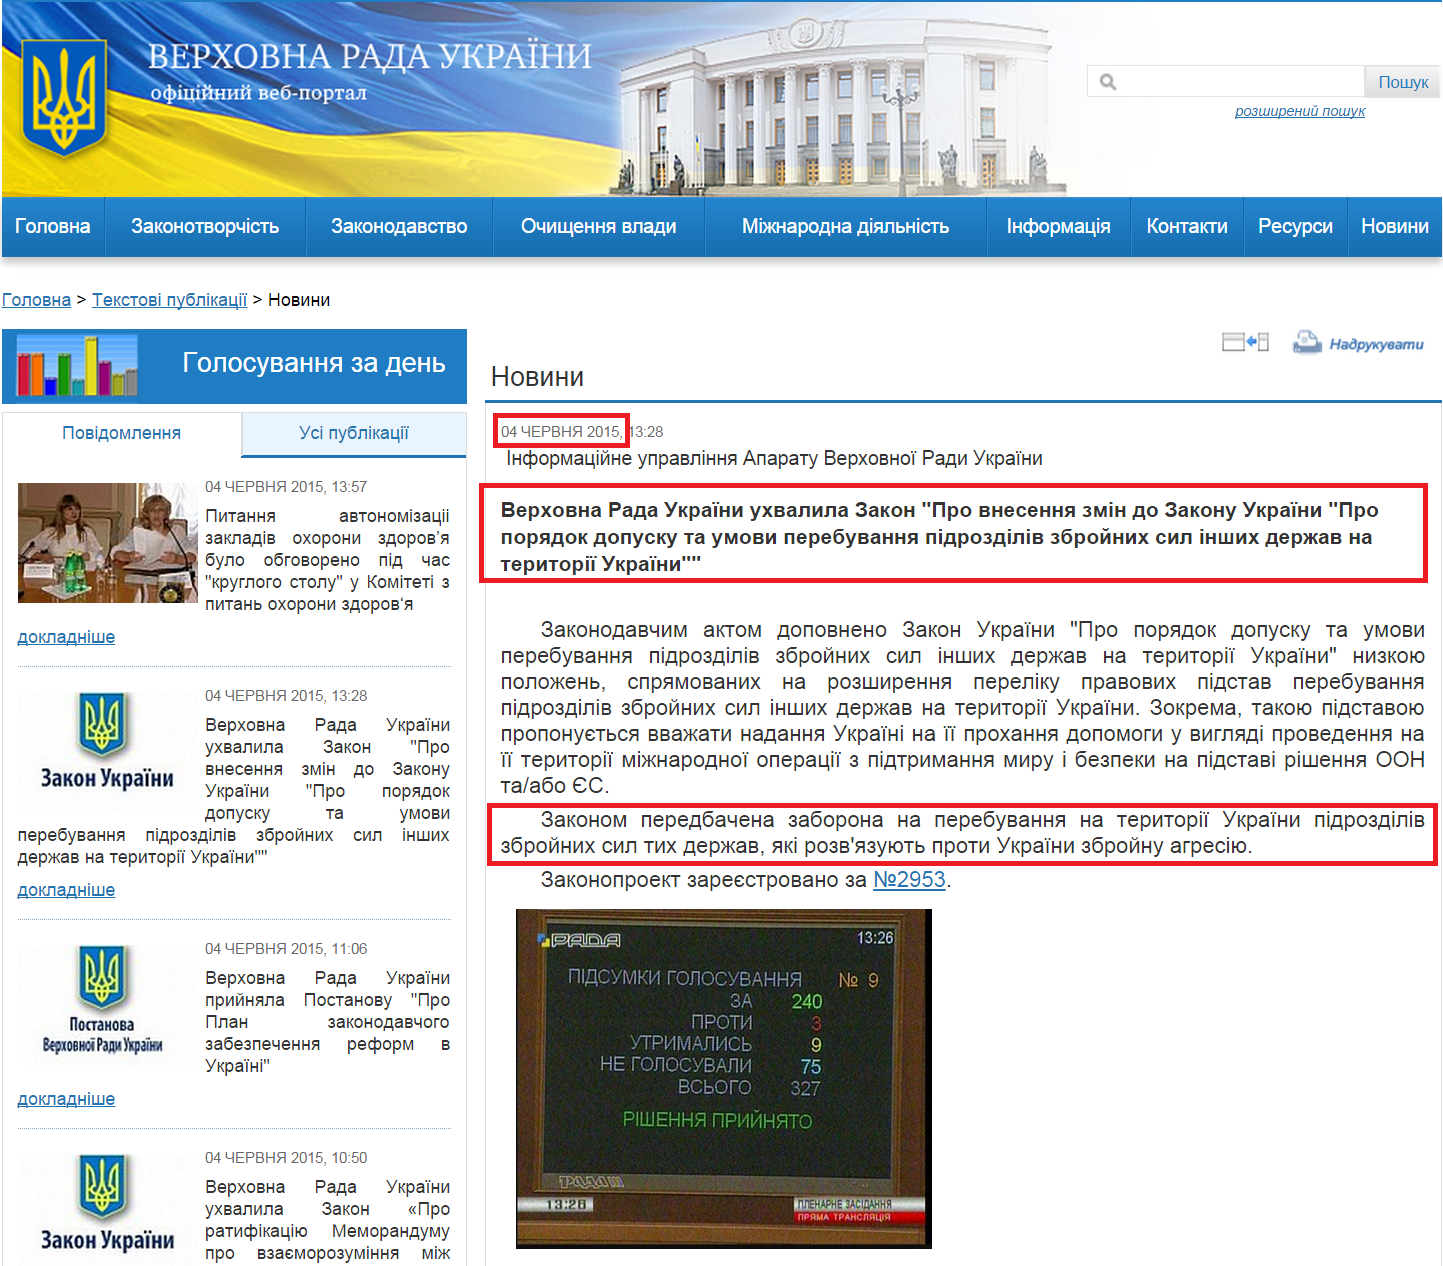 http://iportal.rada.gov.ua/news/Novyny/110903.html